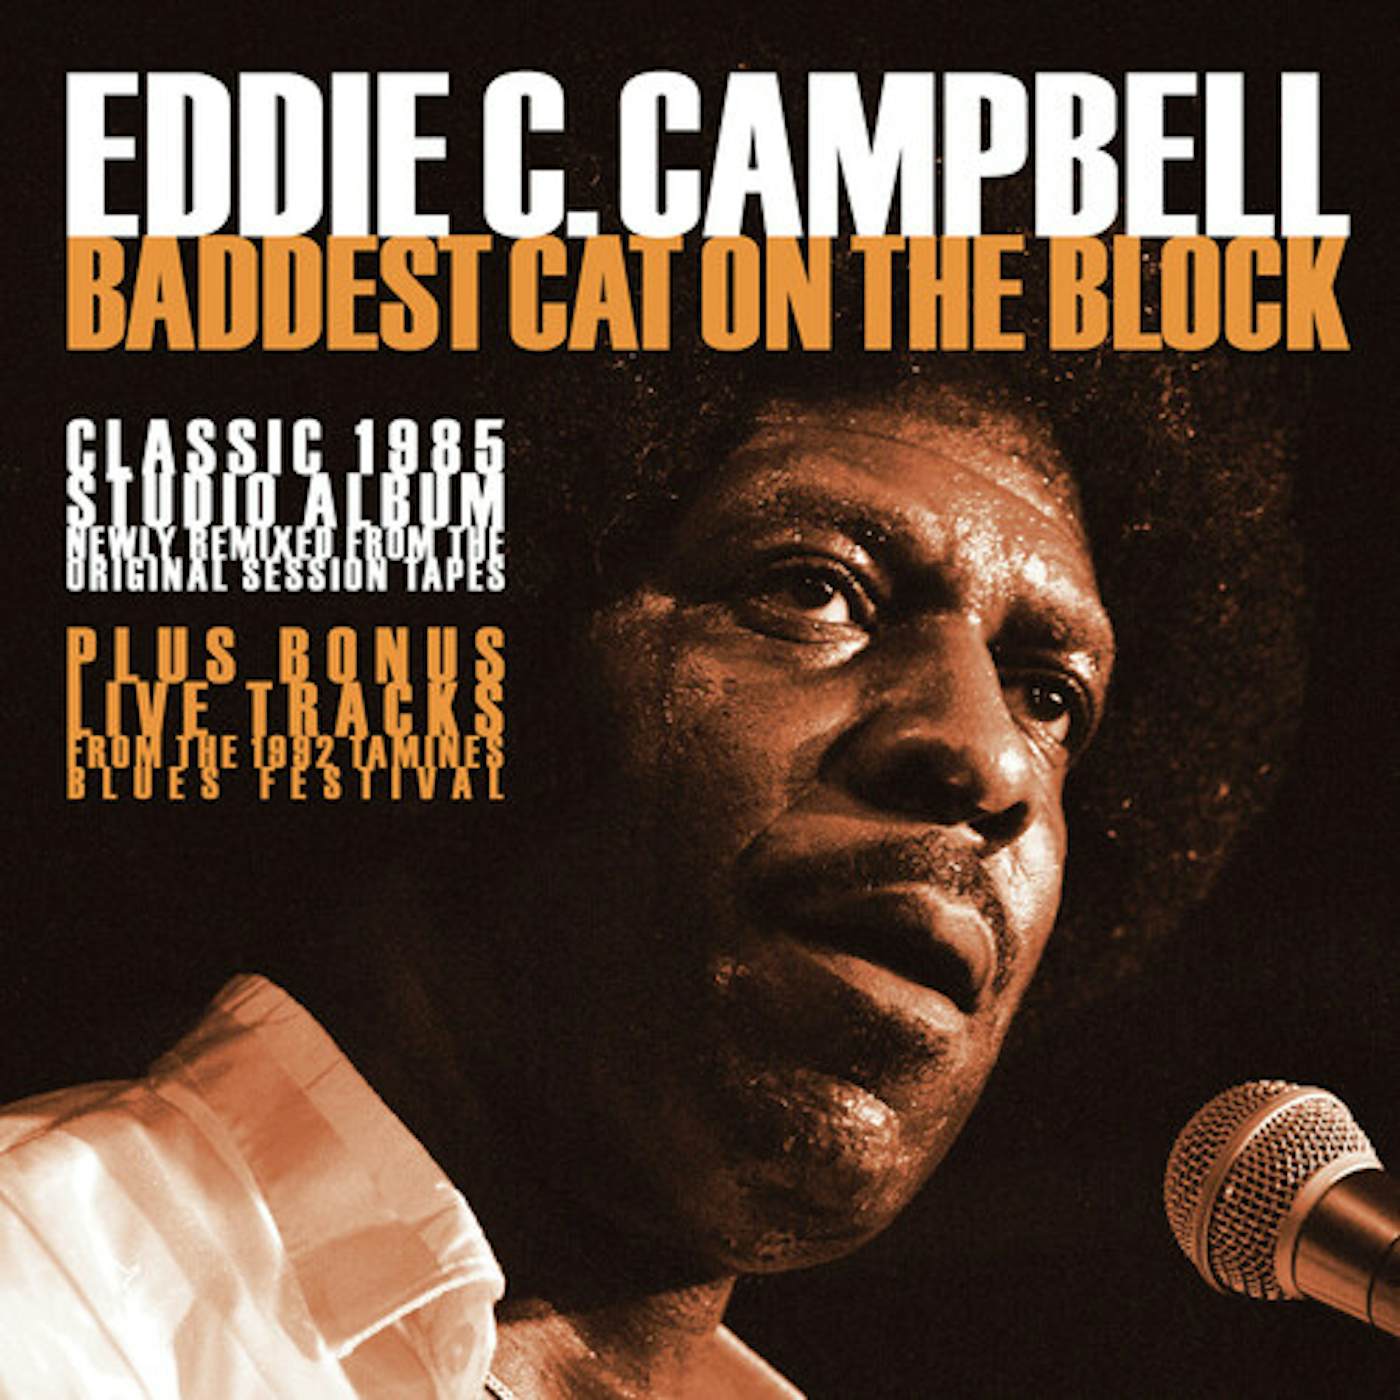 Eddie C. Campbell BADDEST CAT ON THE BLOCK: CLASSIC 1985 REMIXED CD